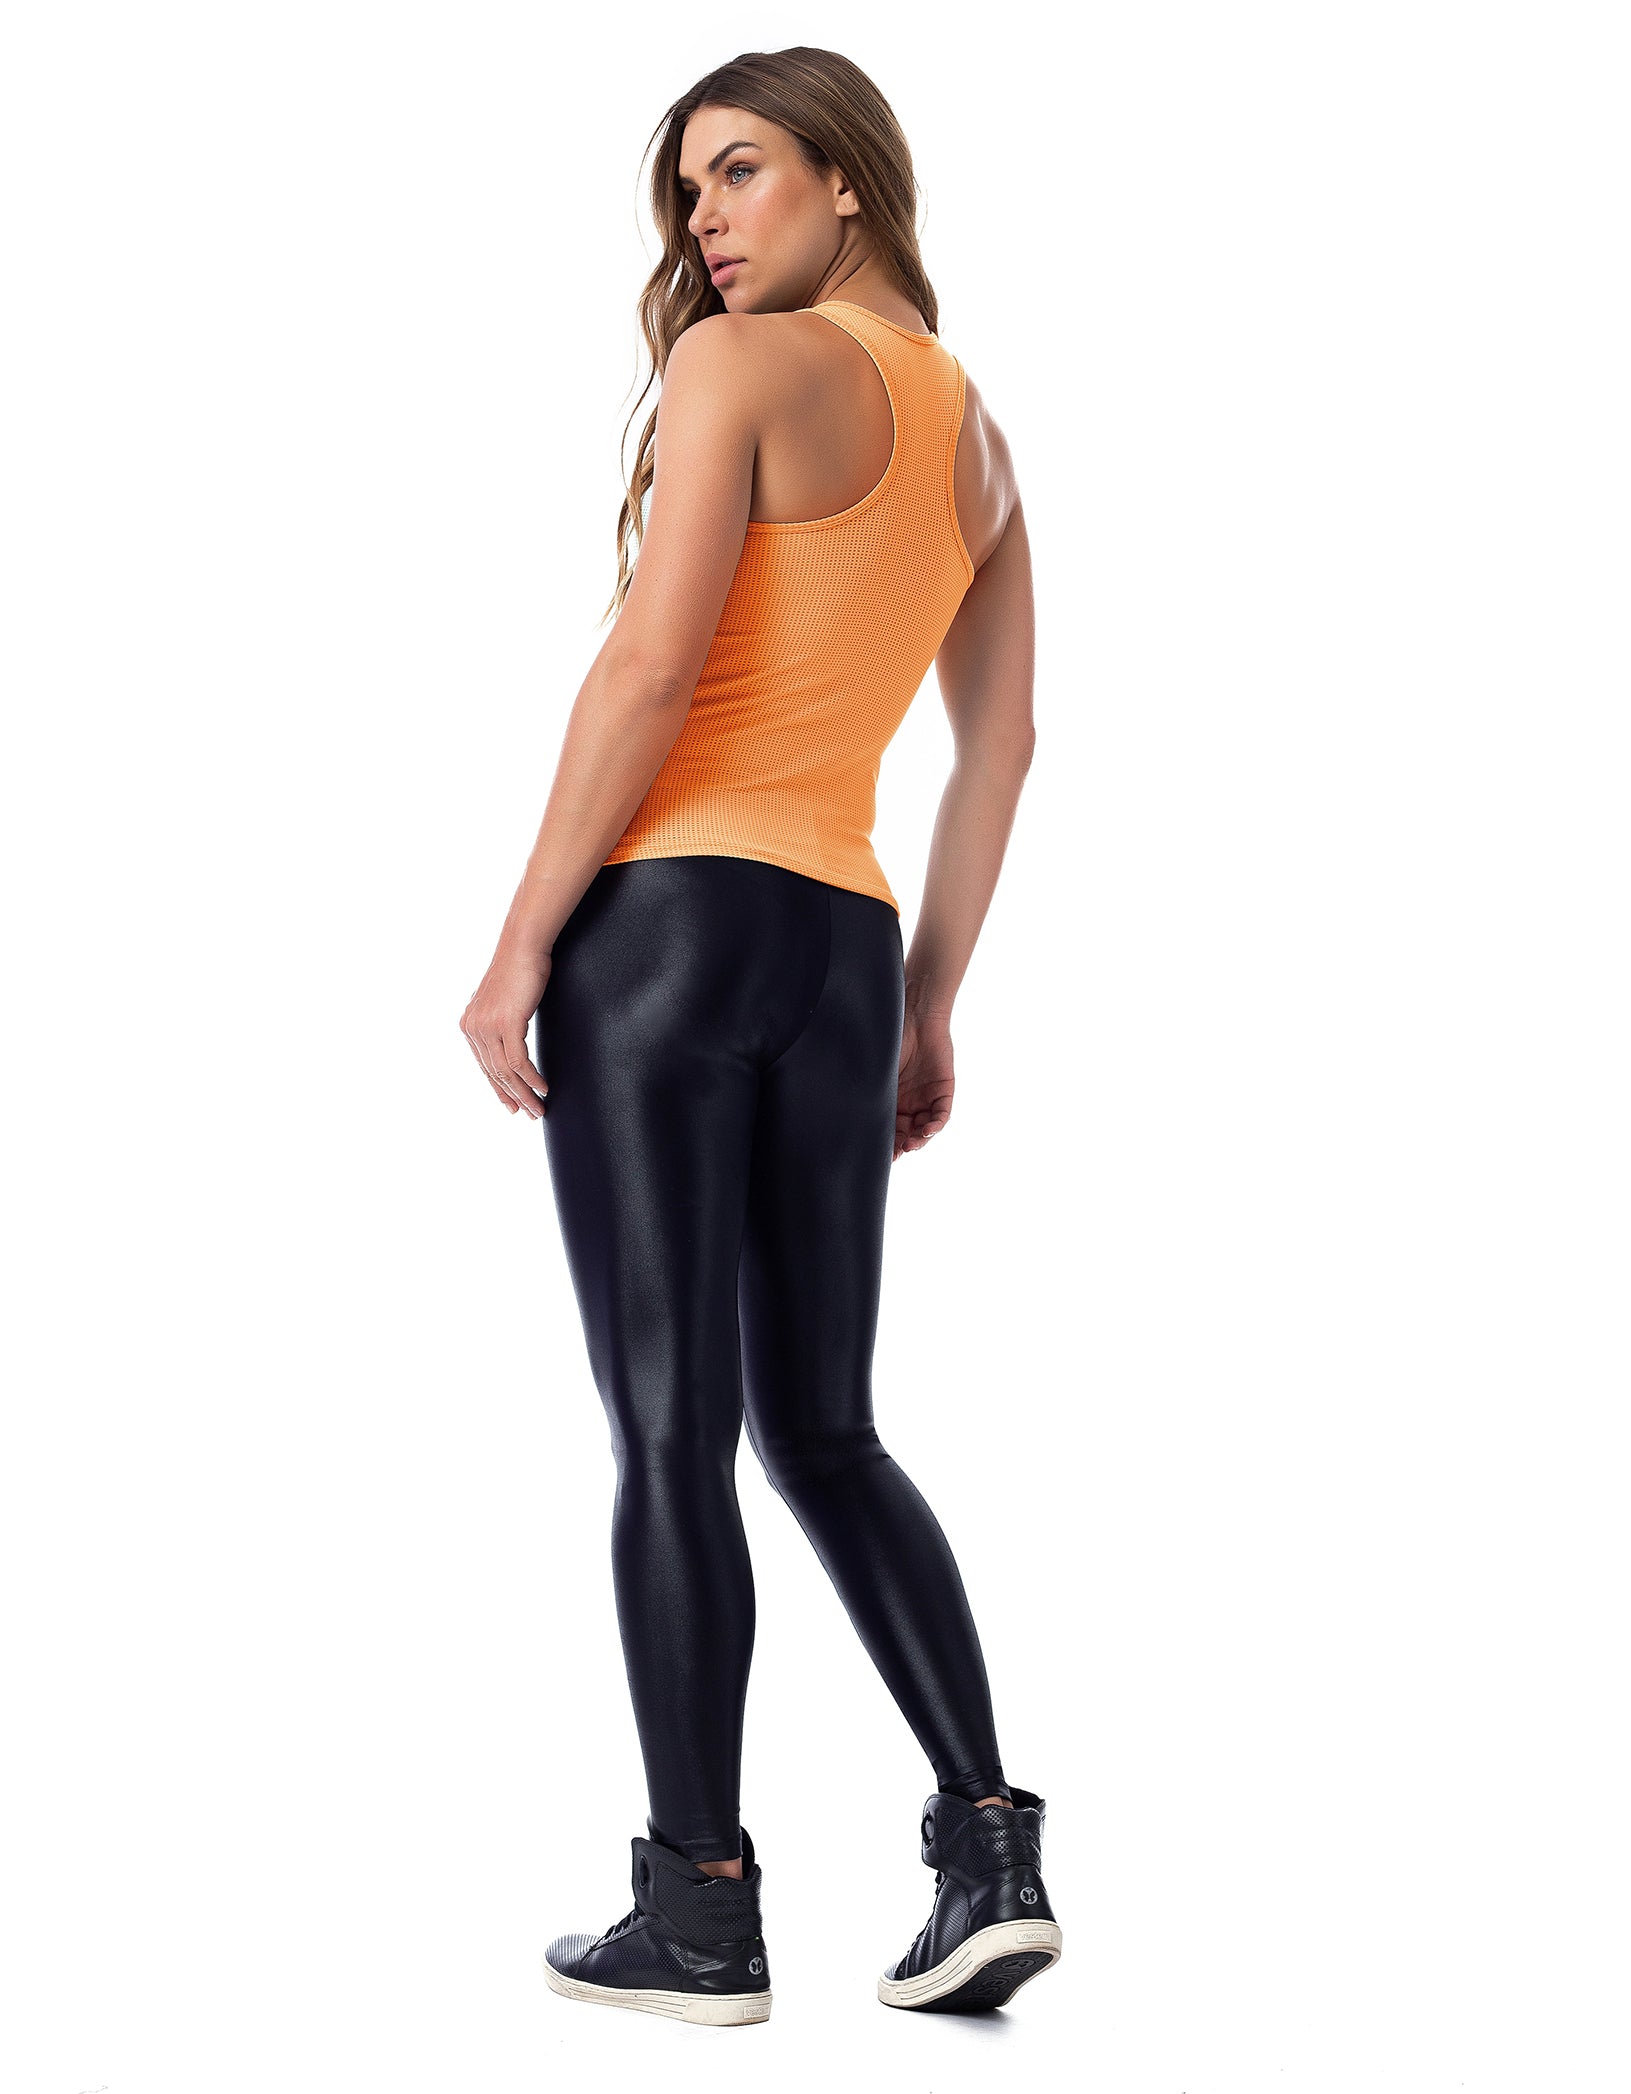 Vestem - Basic Mesh Tank Shirt Neon Orange - REG15C0007